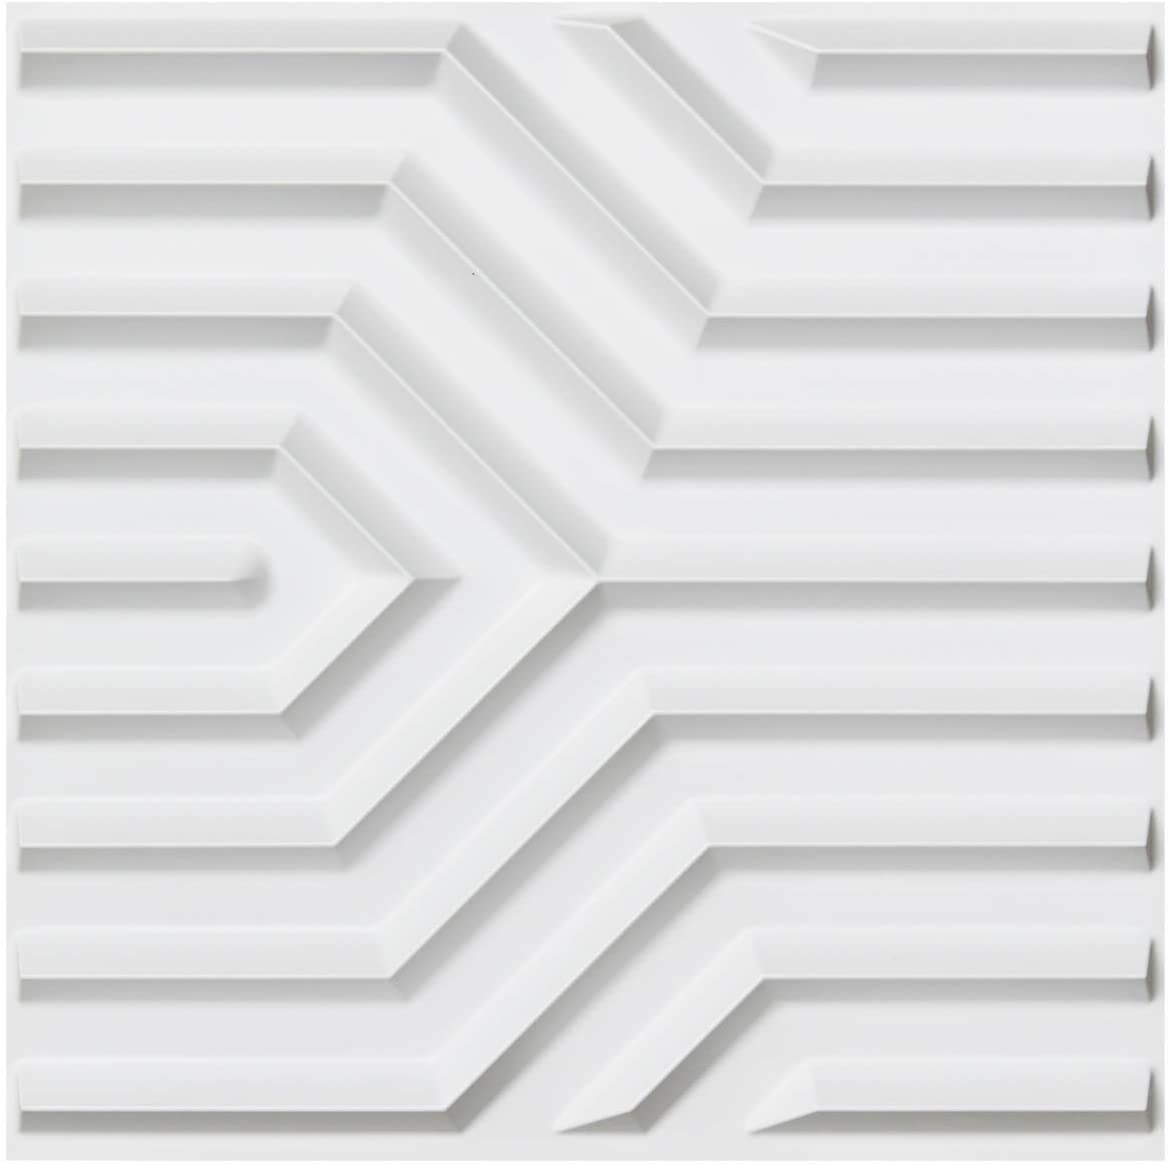 A10043 - Plastic 3D Wall Panel PVC Wall Design, White, 12 Tiles 32 SF